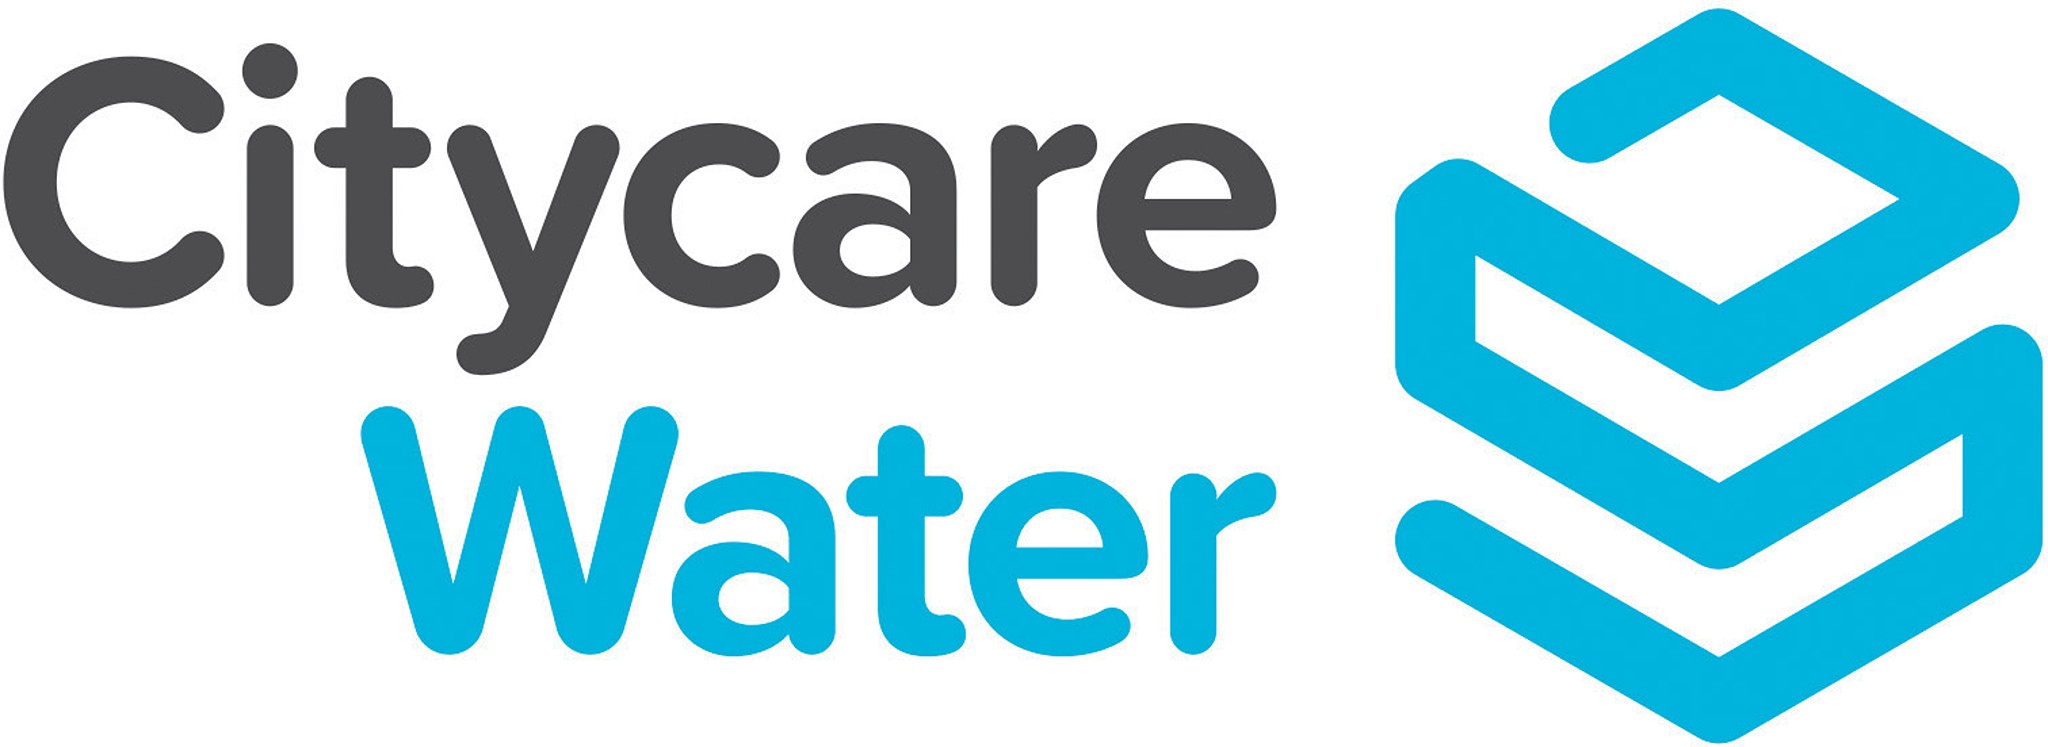 Citycare Water logo